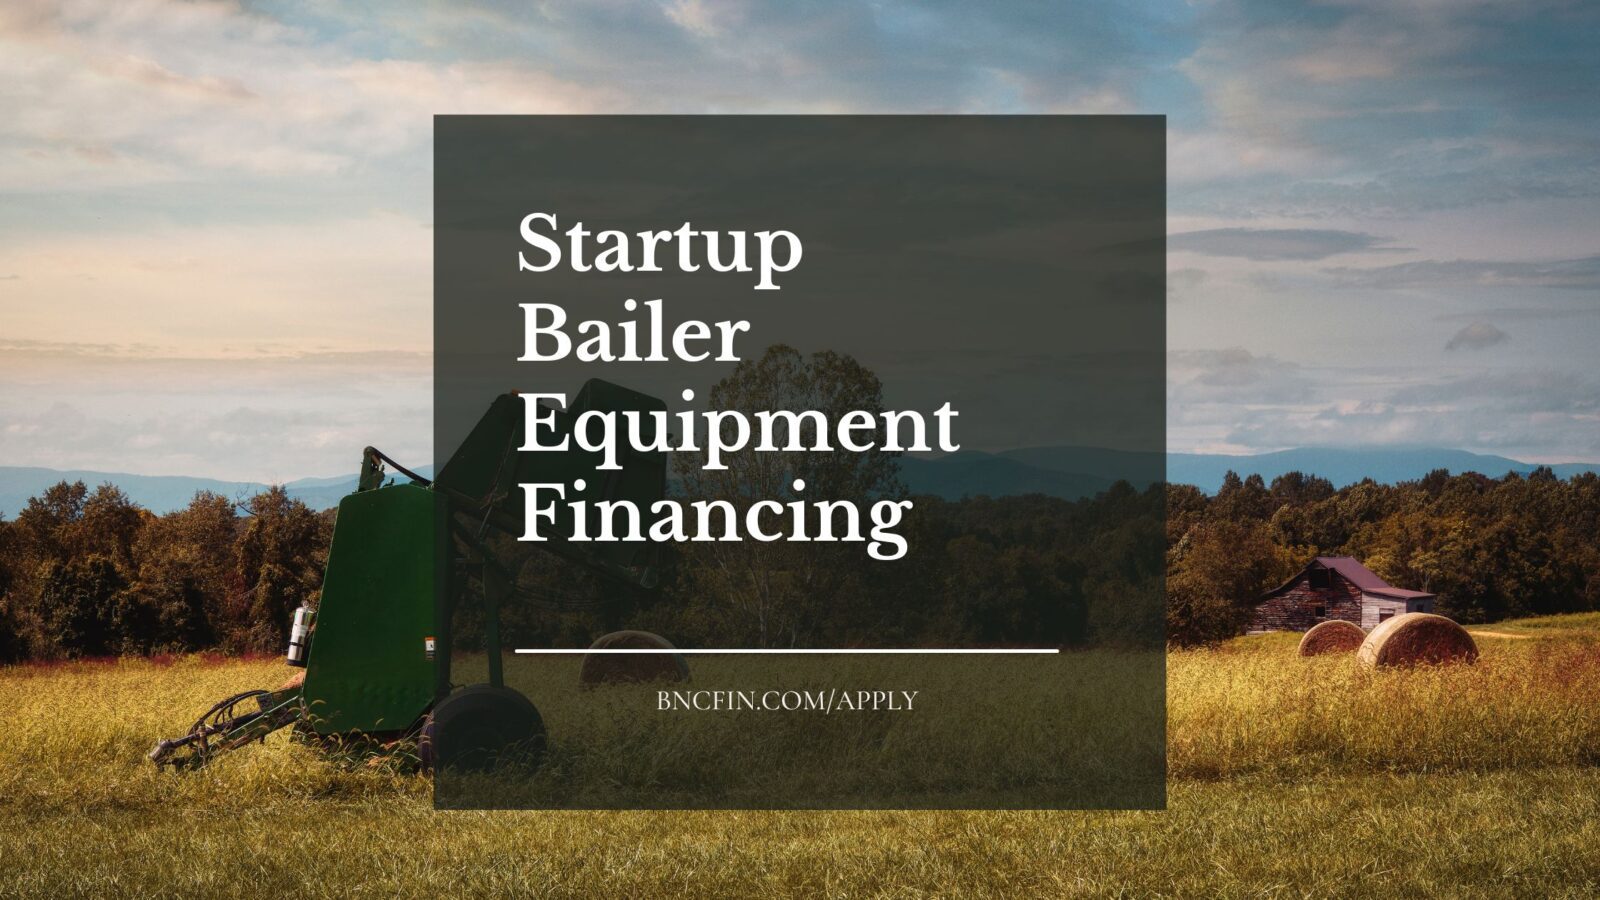 Startup Bailer Equipment Financing